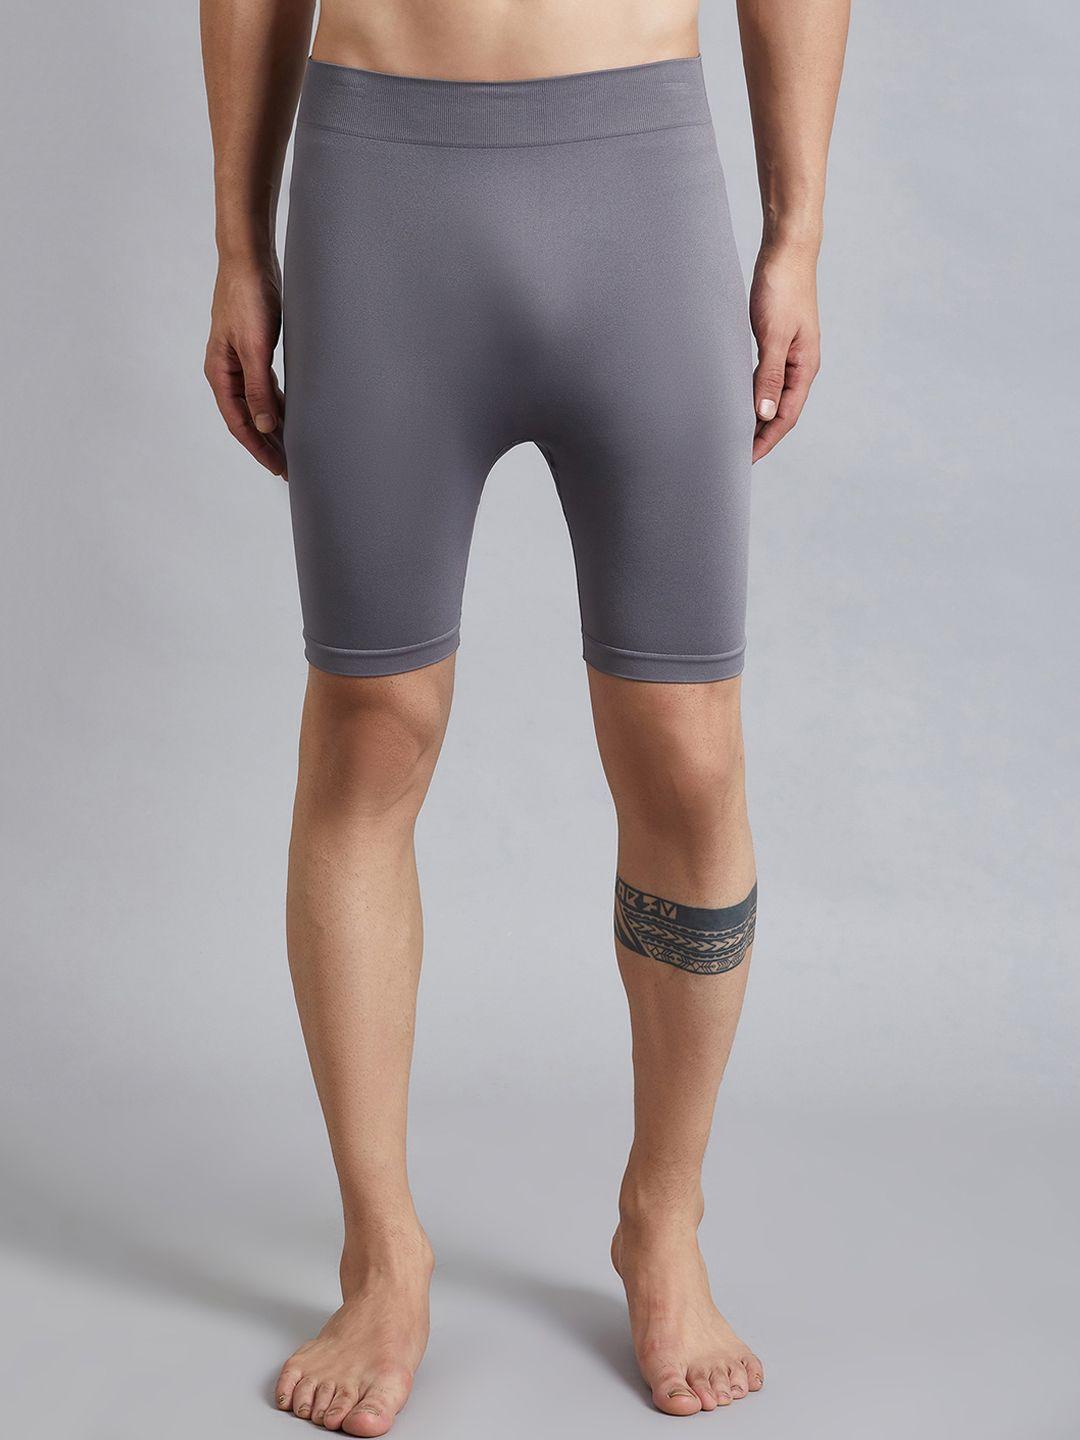 c9 airwear men low rise cycling shorts